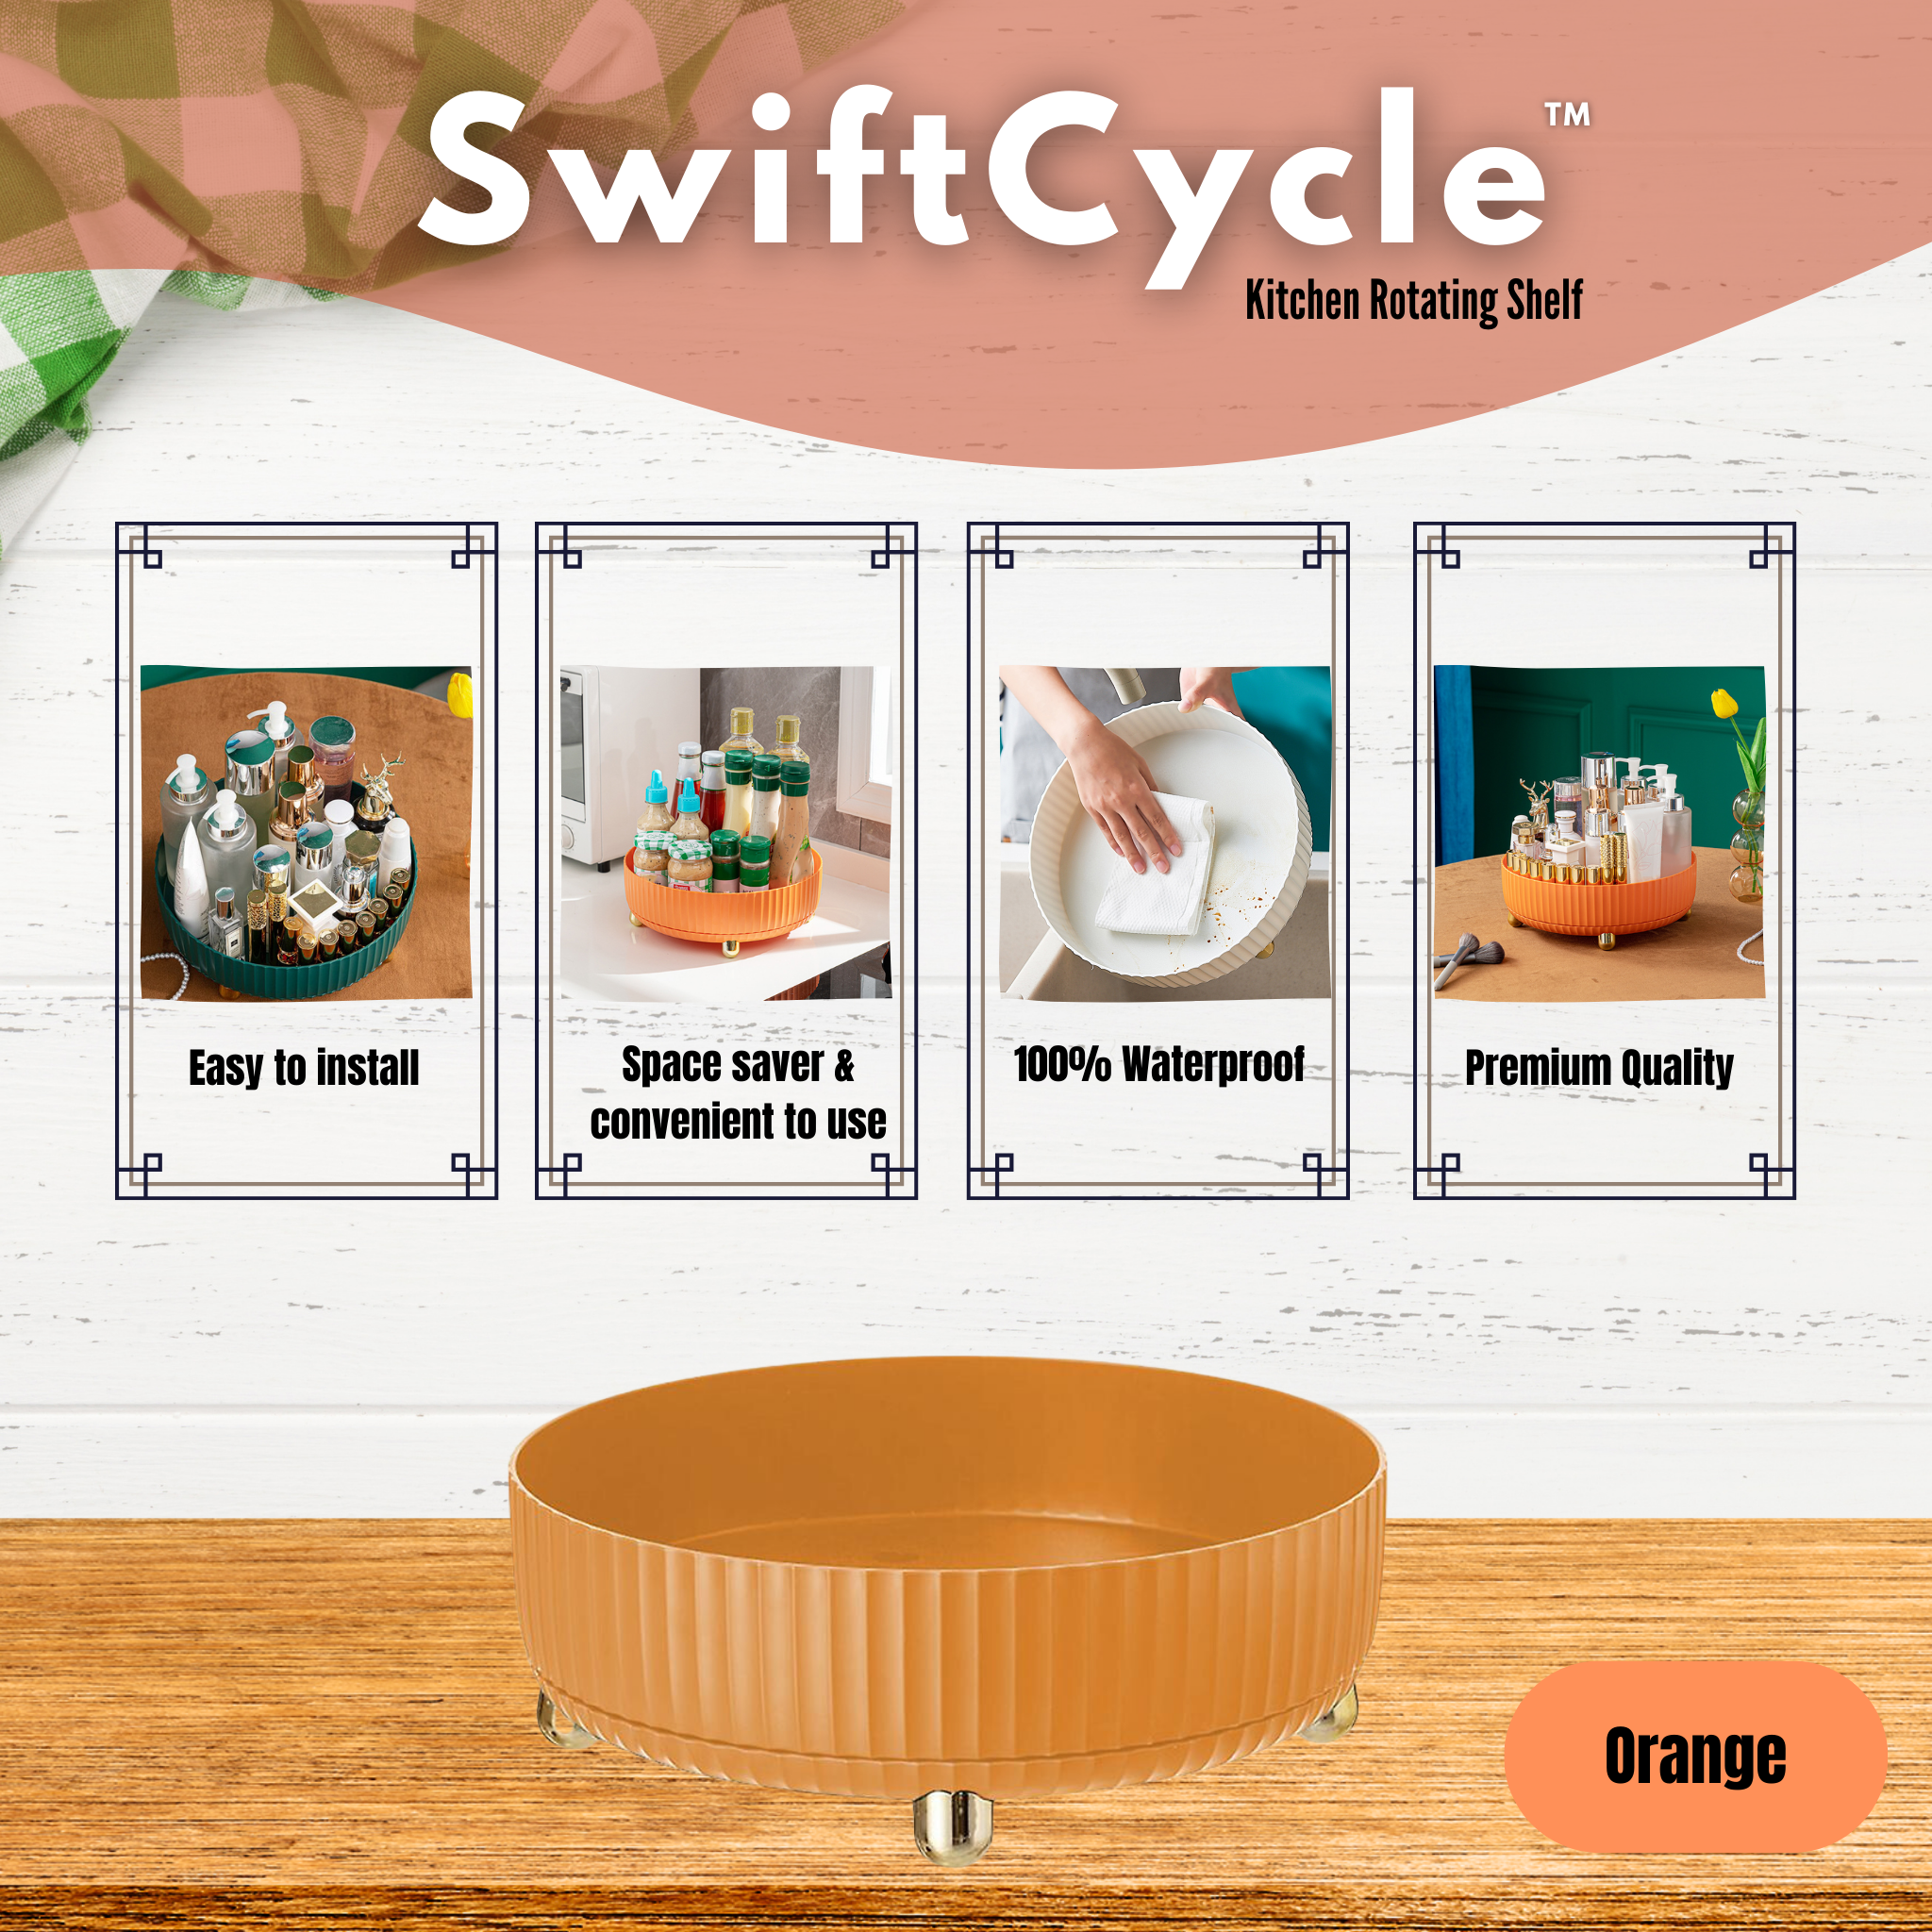 SwiftCycle™ Kitchen Rotating Shelf